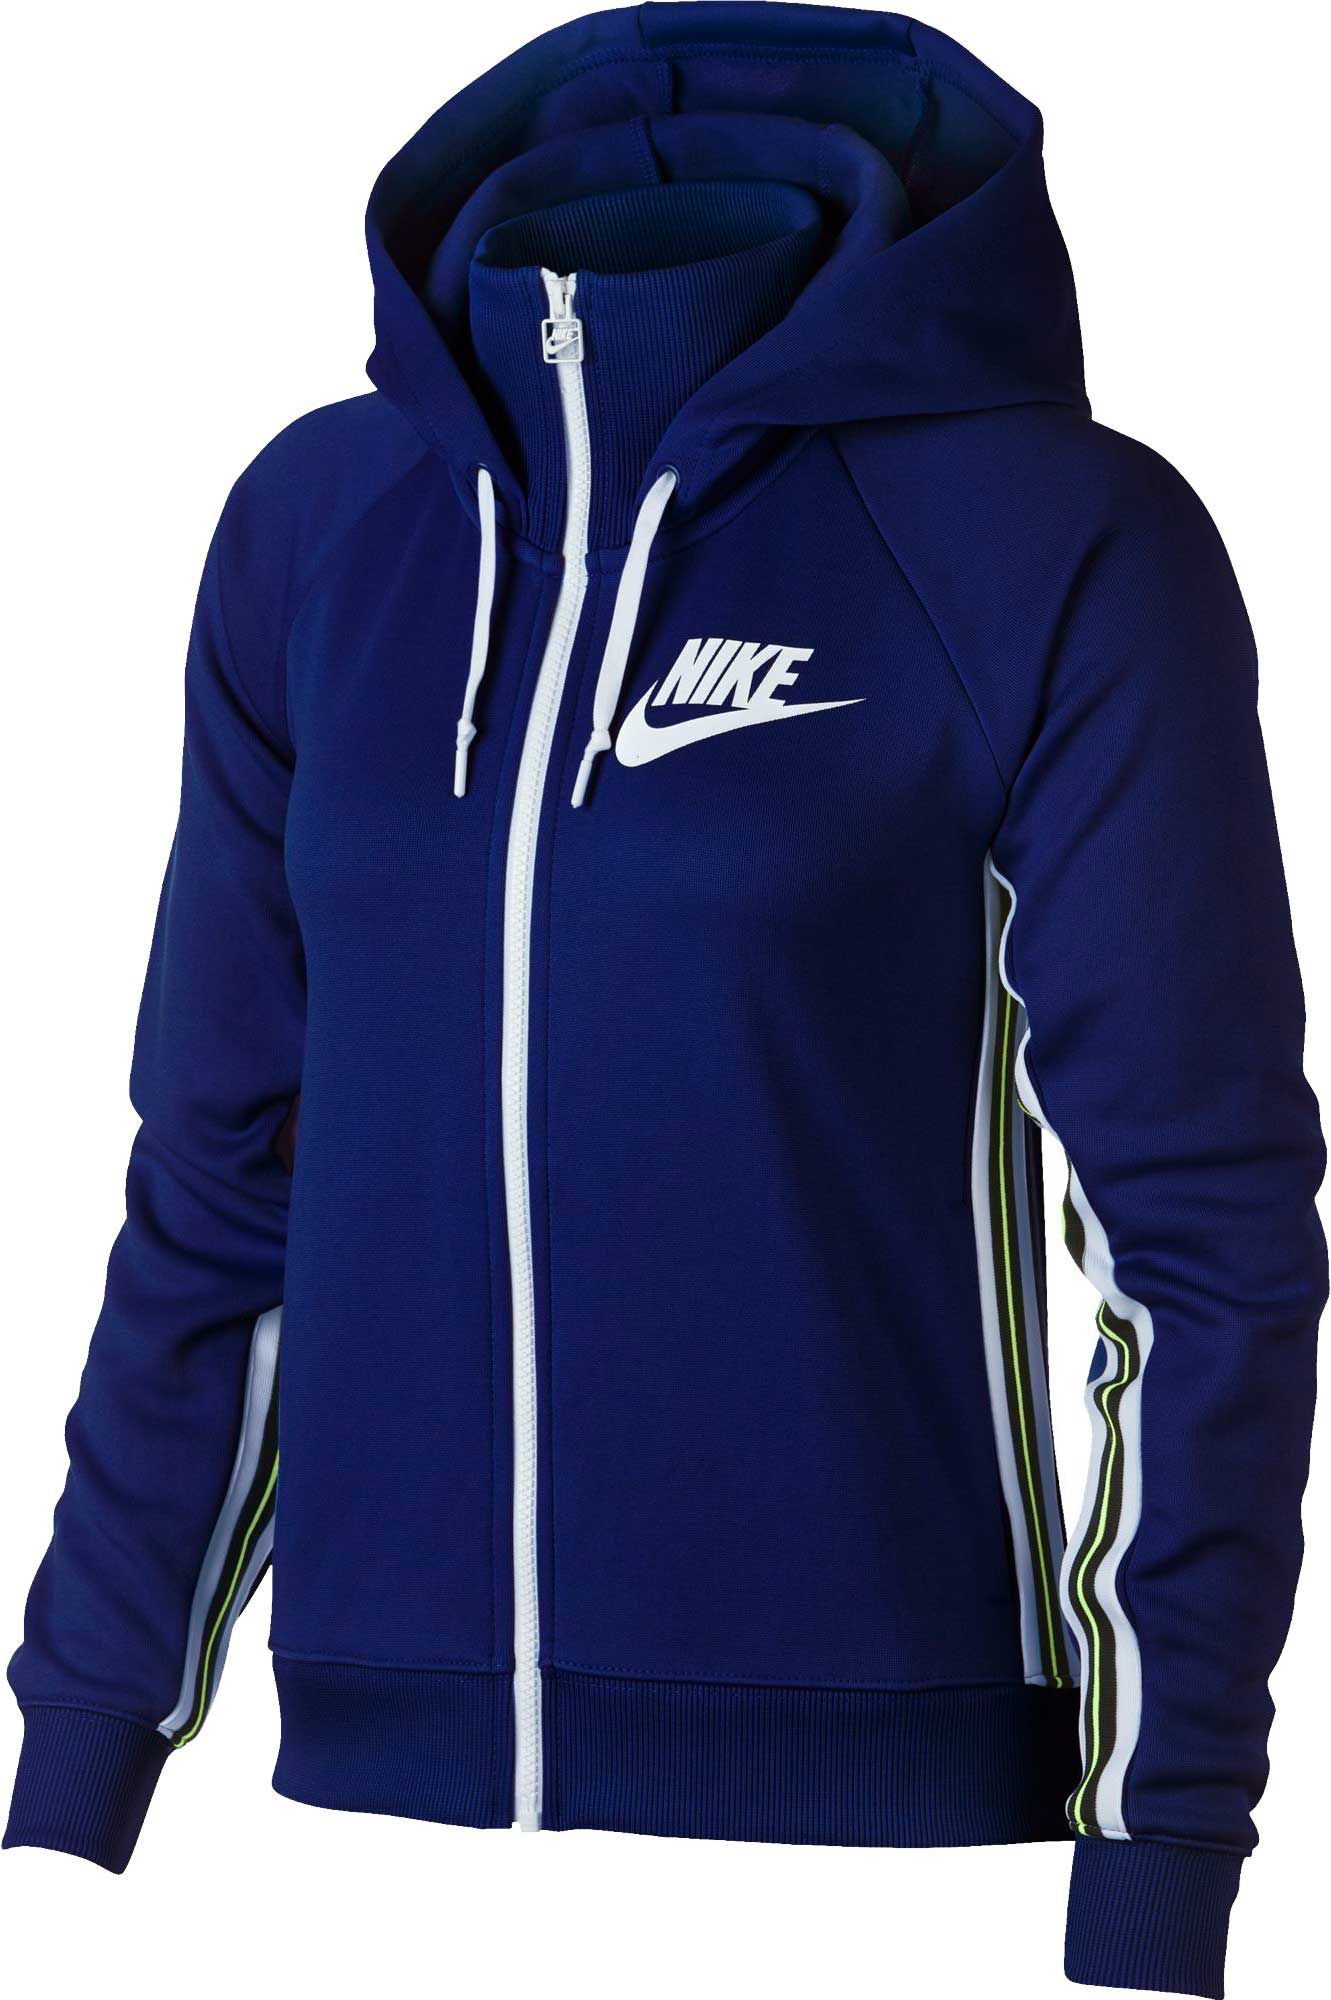 Nike sweaters womens zip up jacket holiday